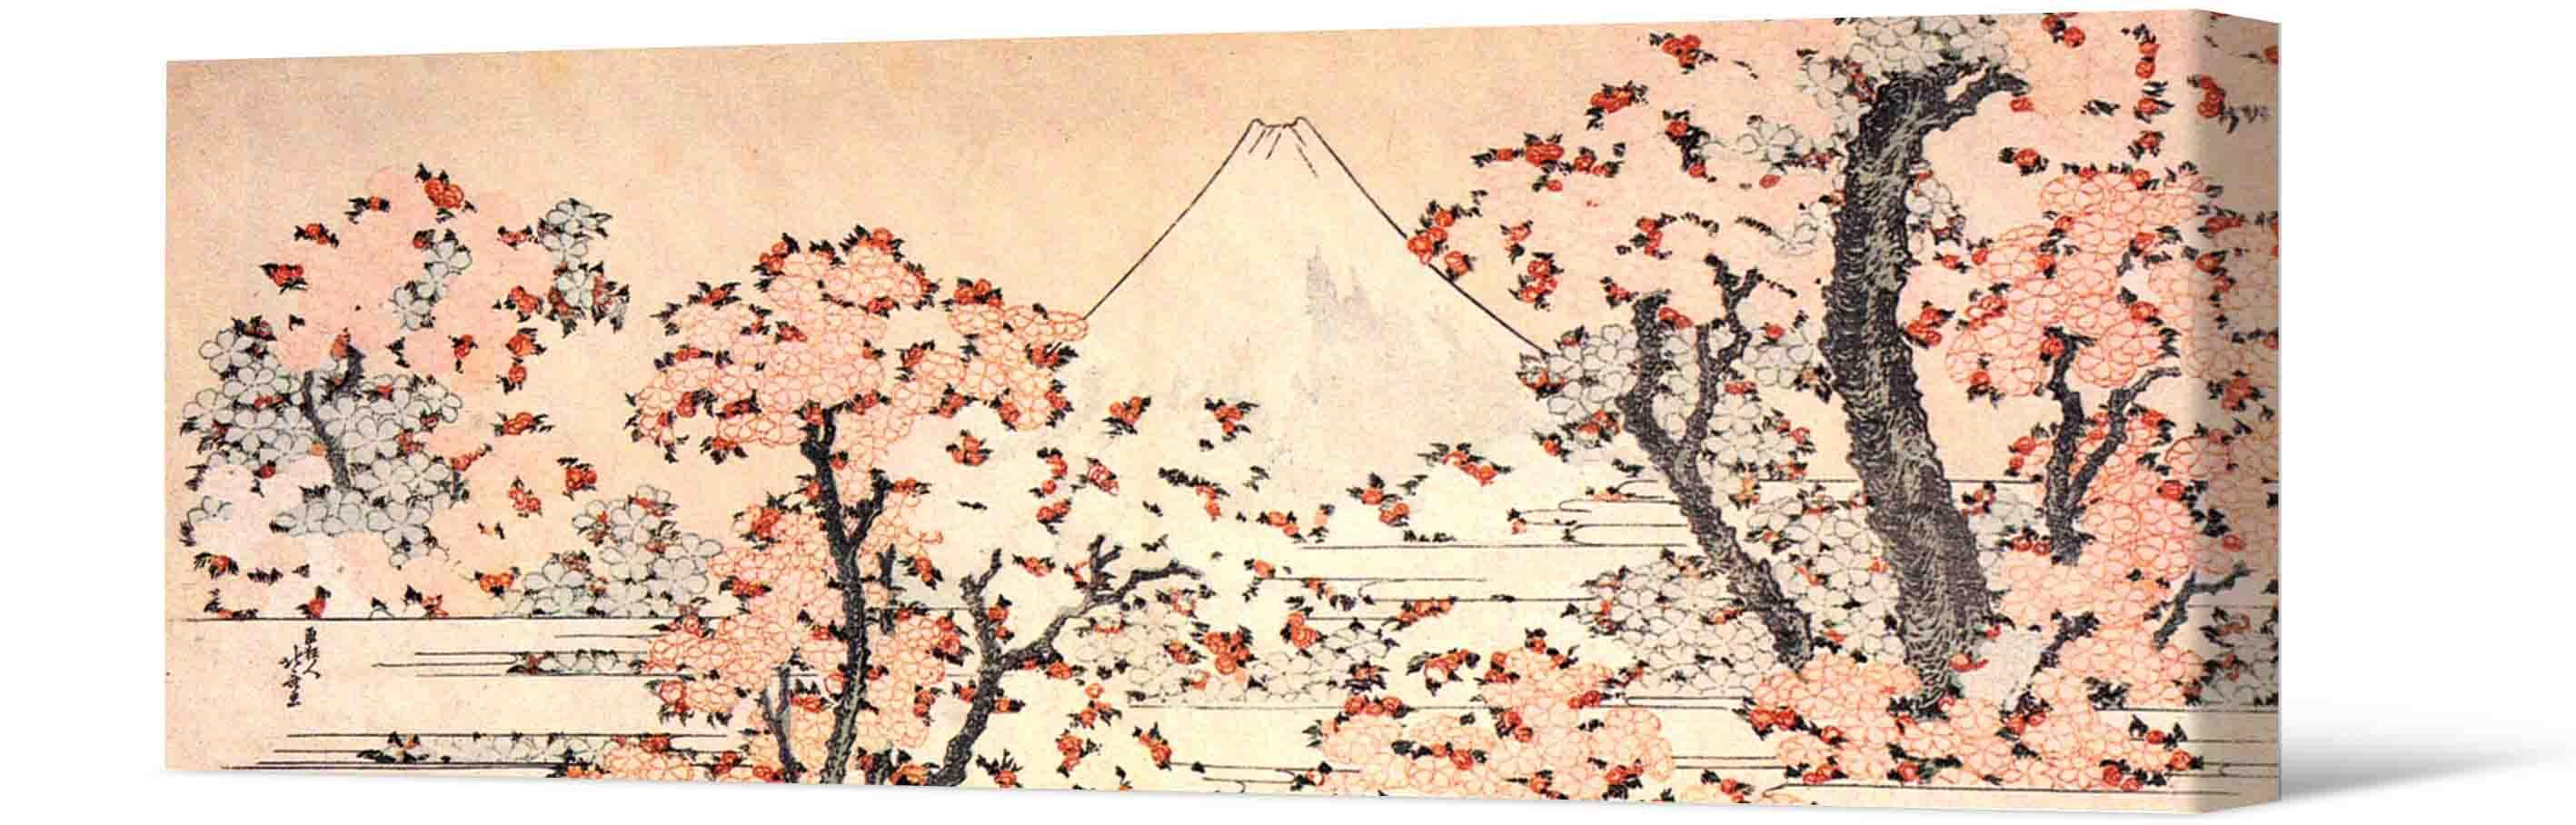 Zdjęcie - drzewa sakura i wulkan